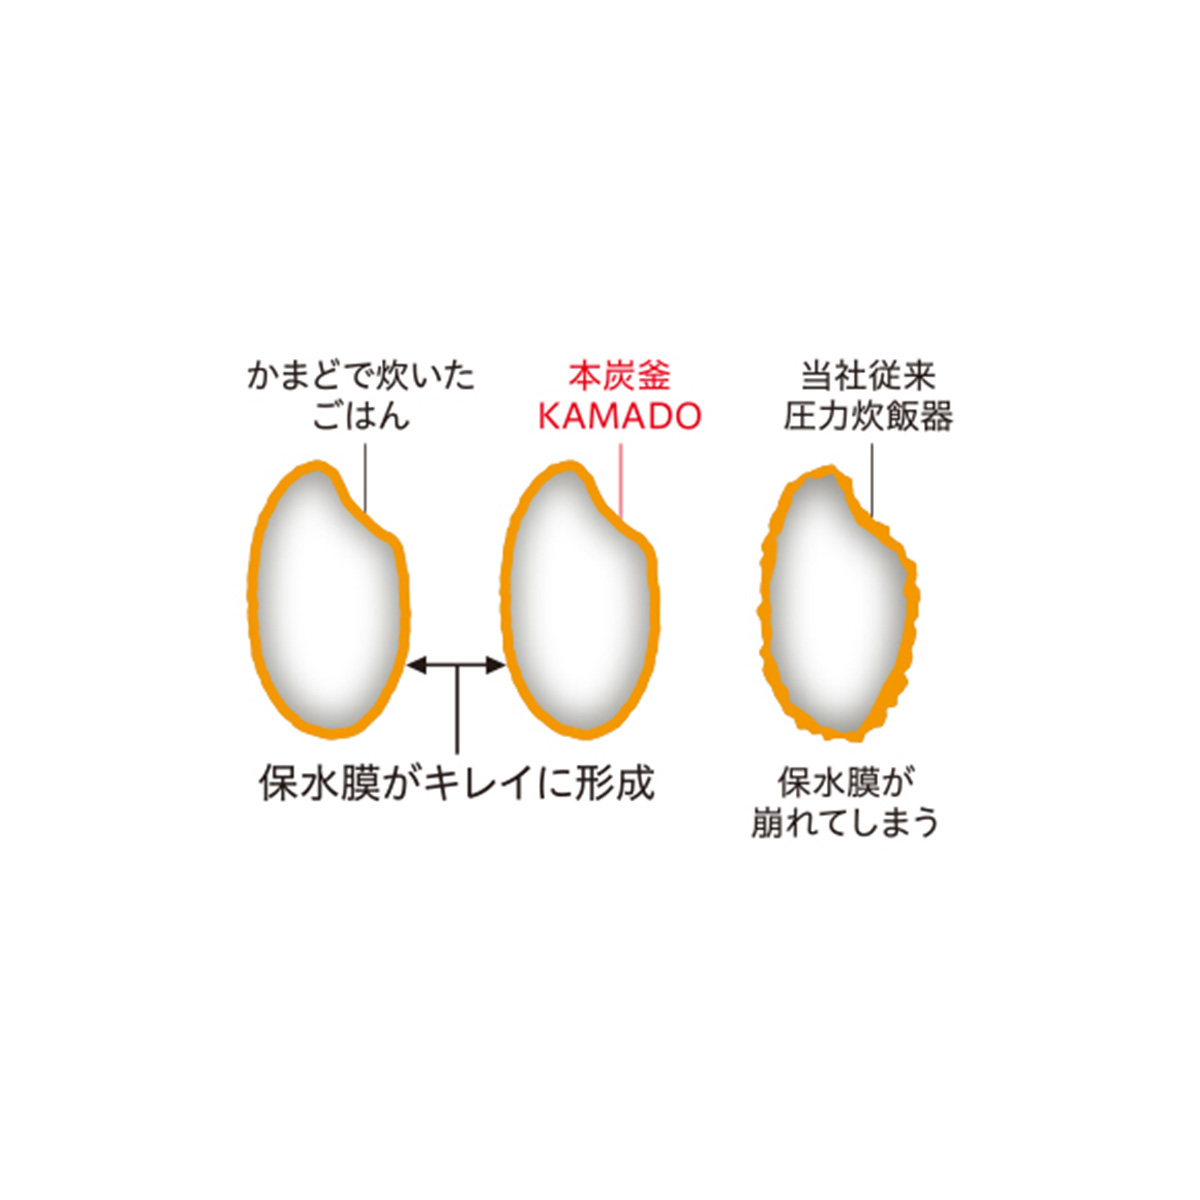 IoT対応 本炭釜KAMADO IH炊飯器 新潟県産 コシヒカリ 5kg(1袋)セット